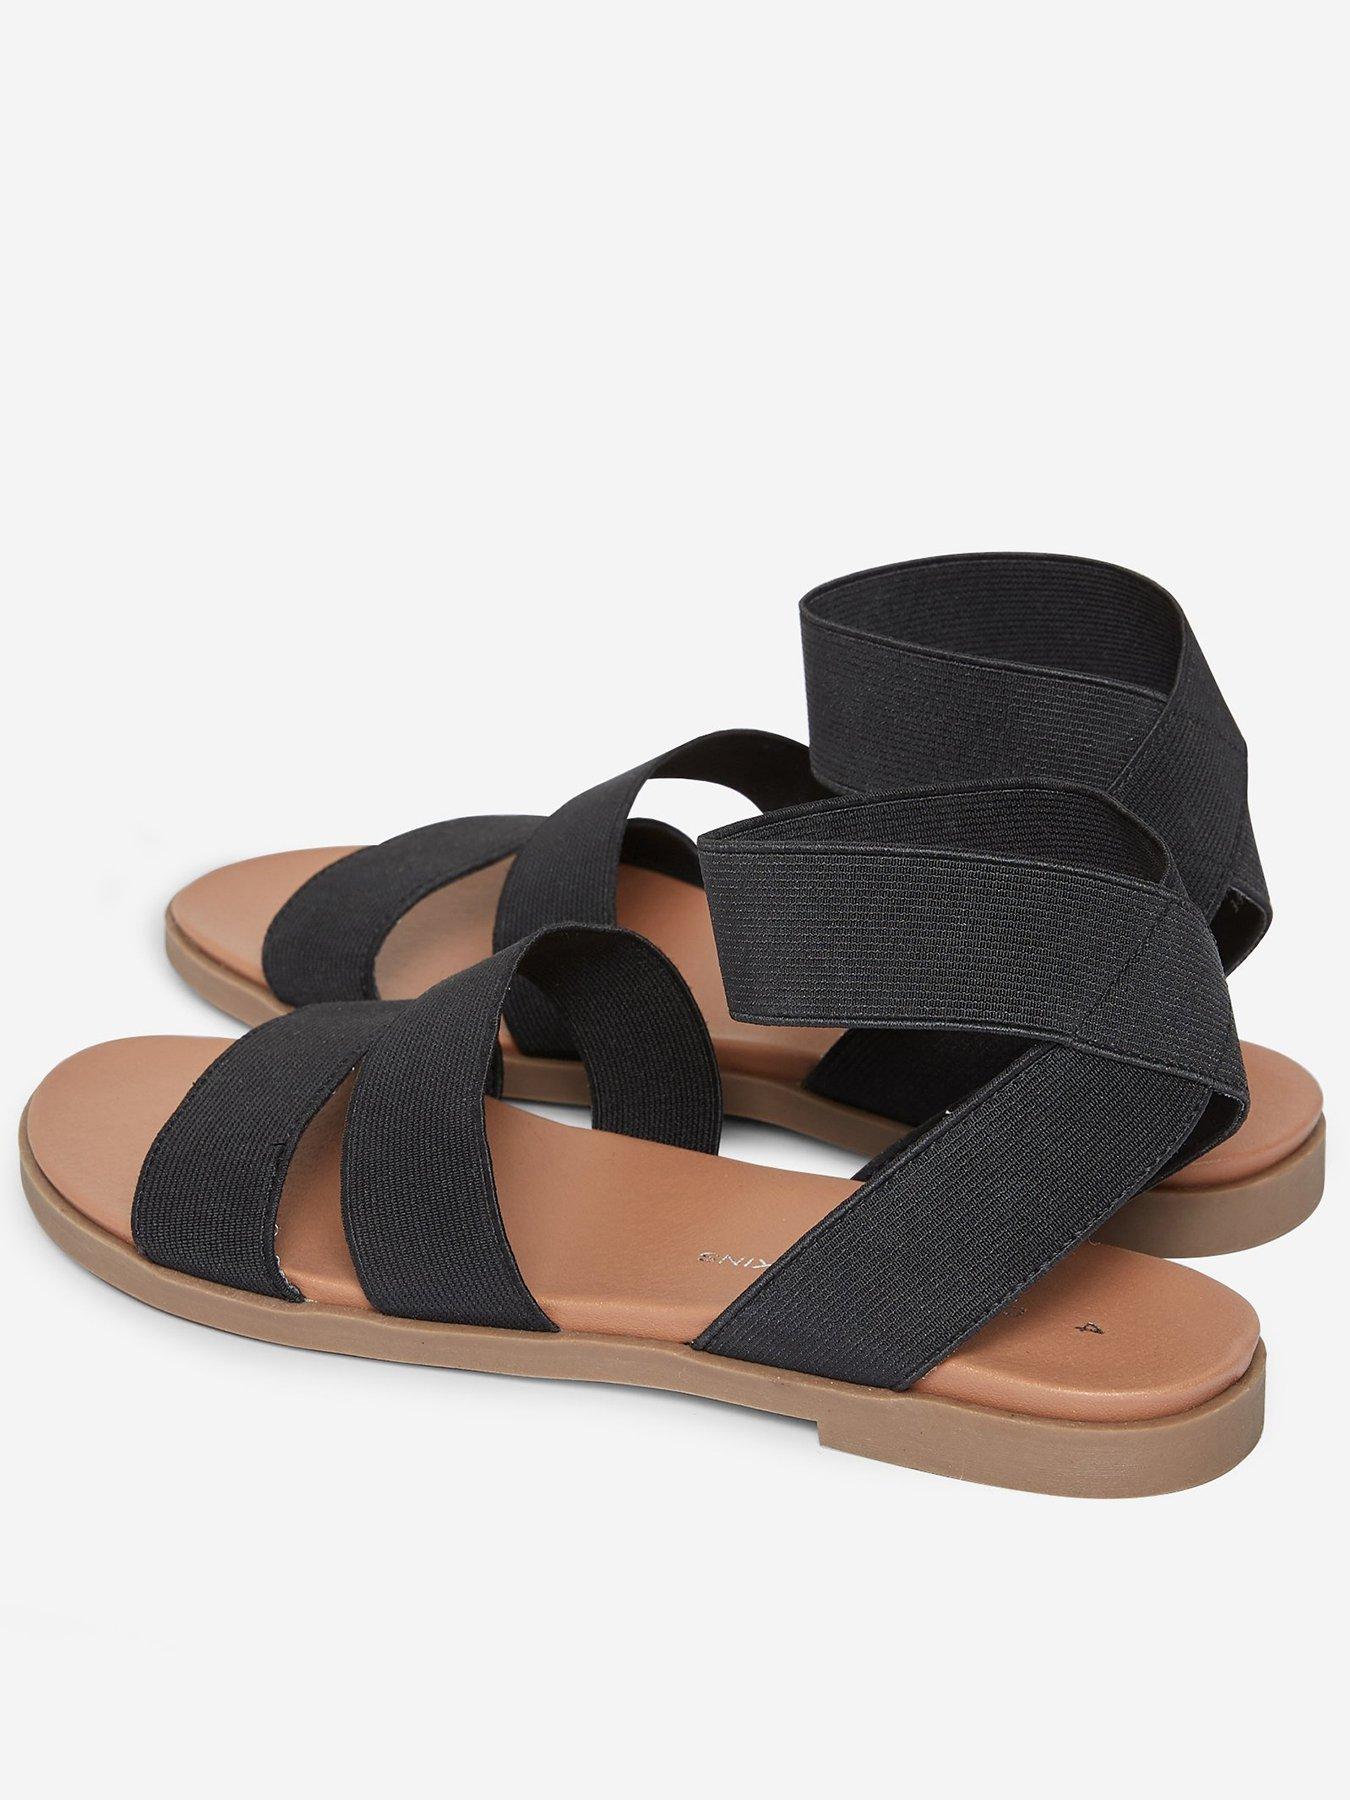 dorothy perkins comfort sandals